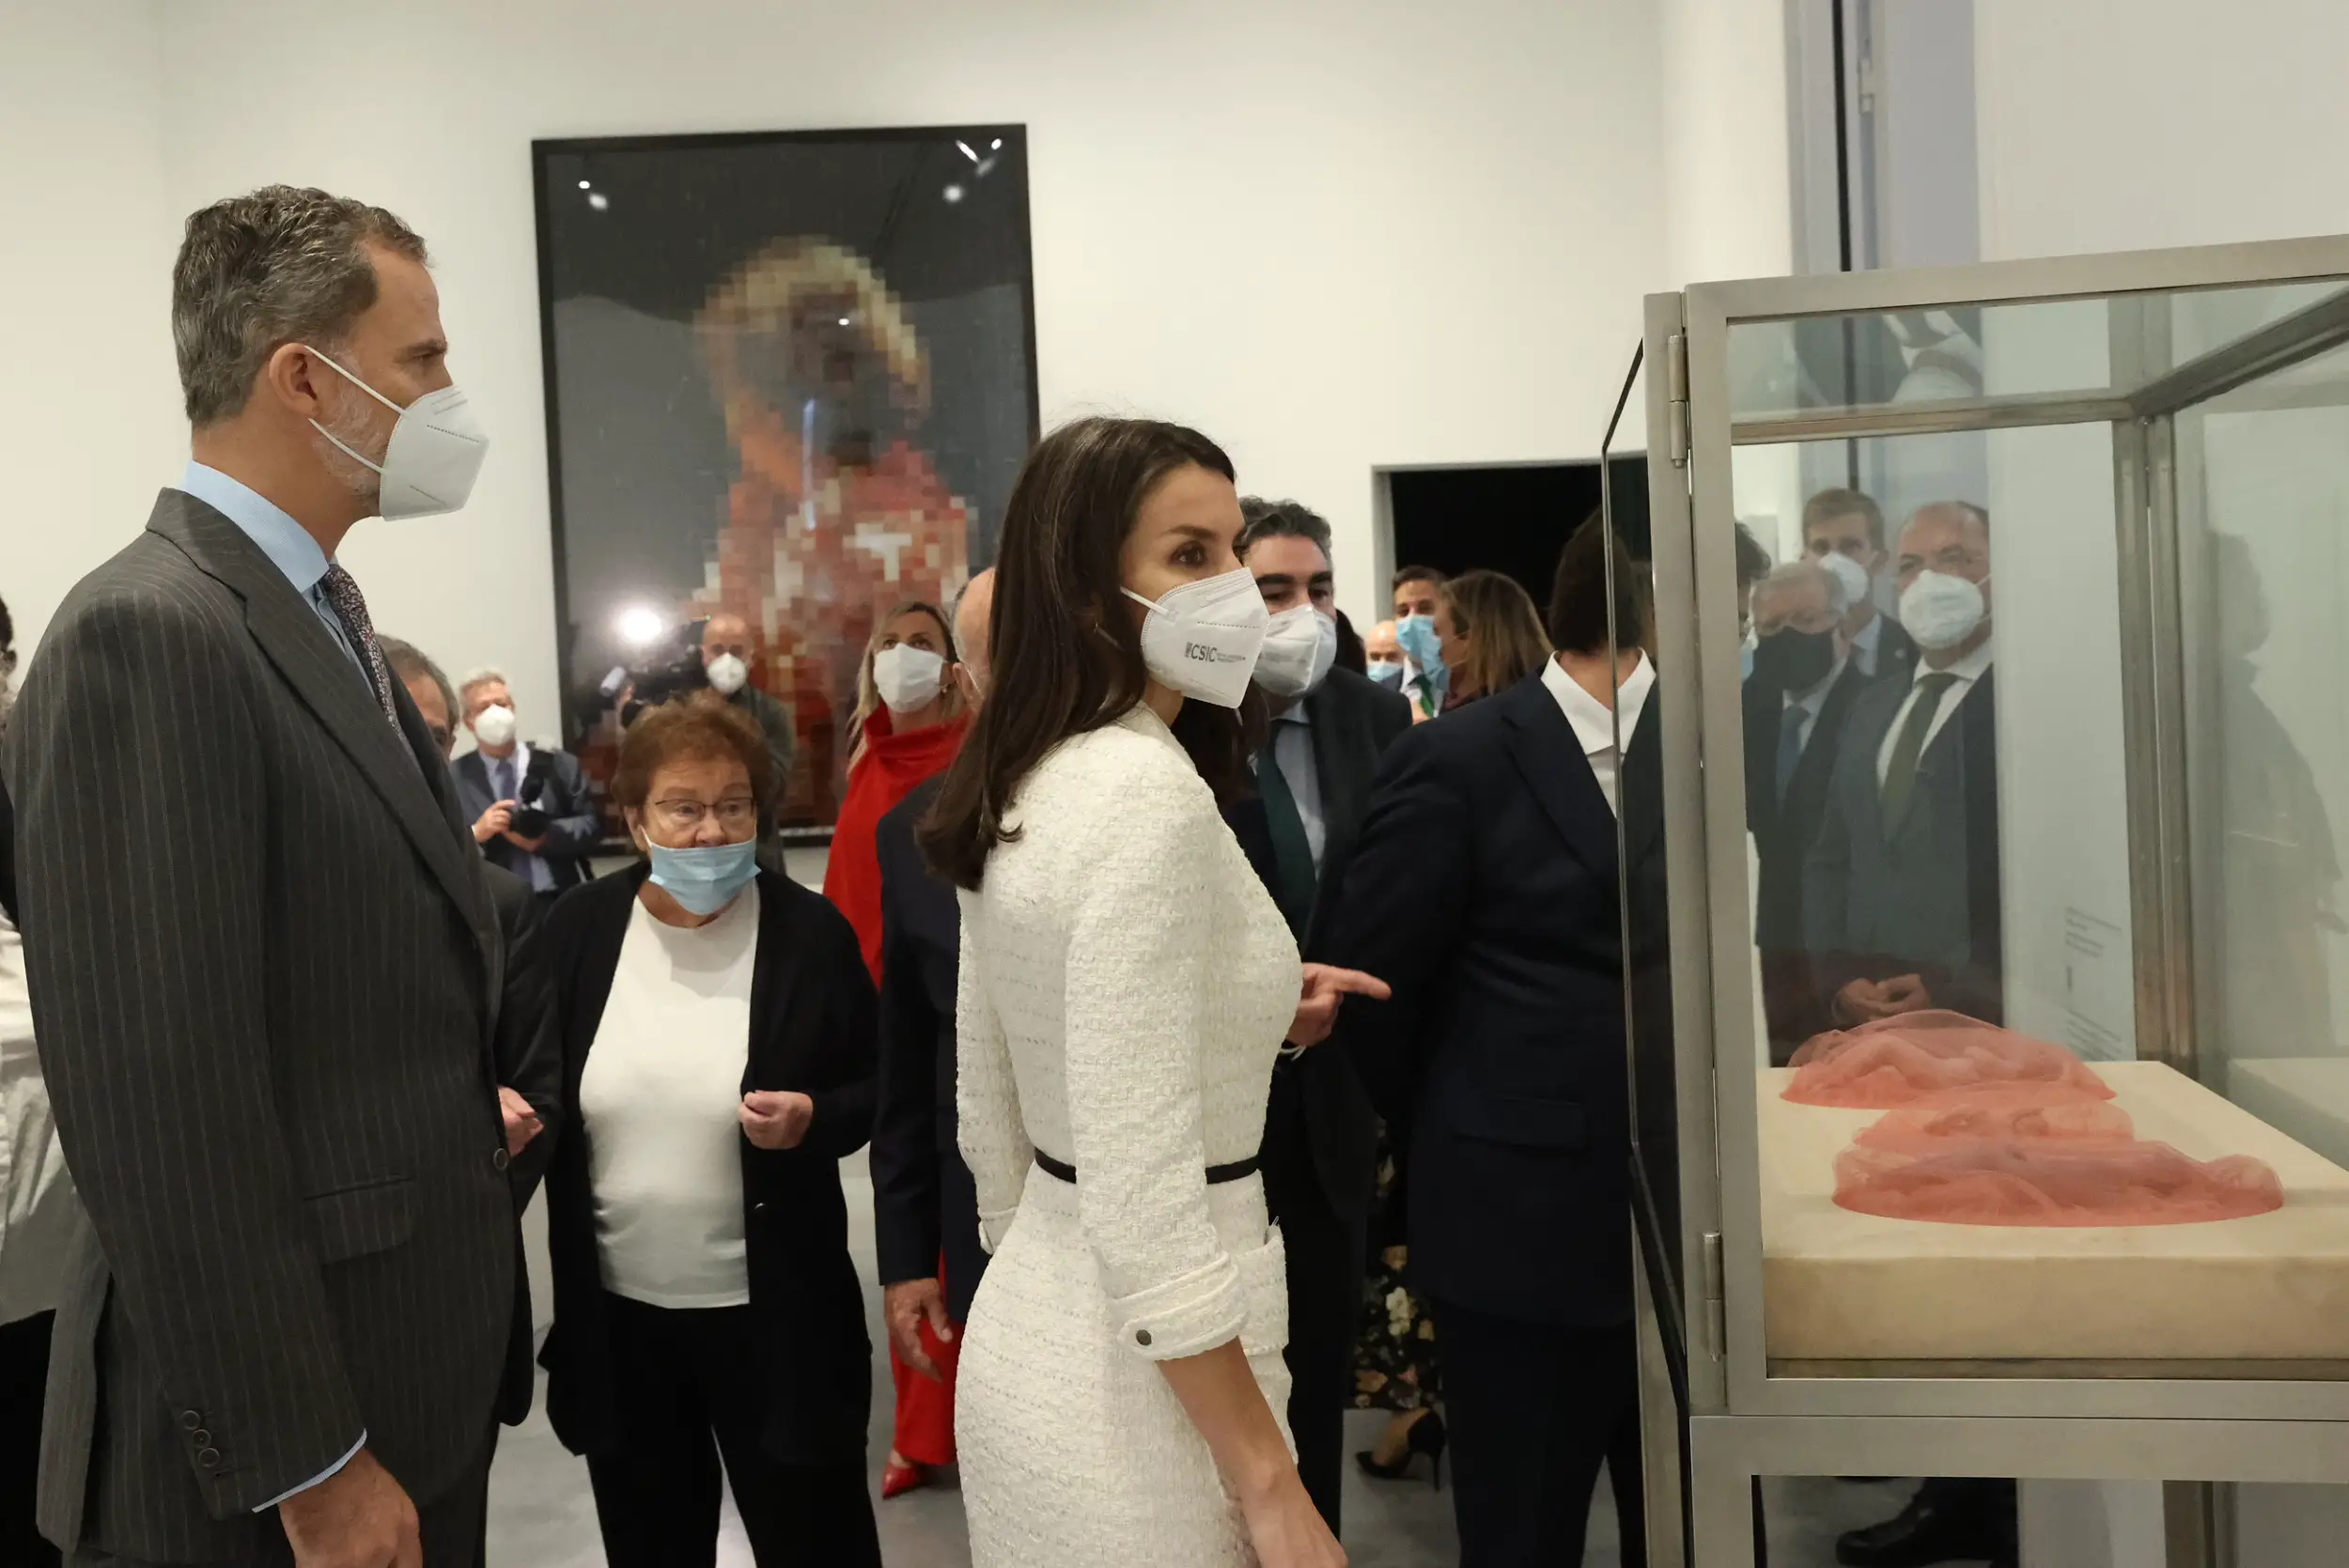 Queen Letizia of Spain wore white tweed Felipe Varela to the Art Museum opening